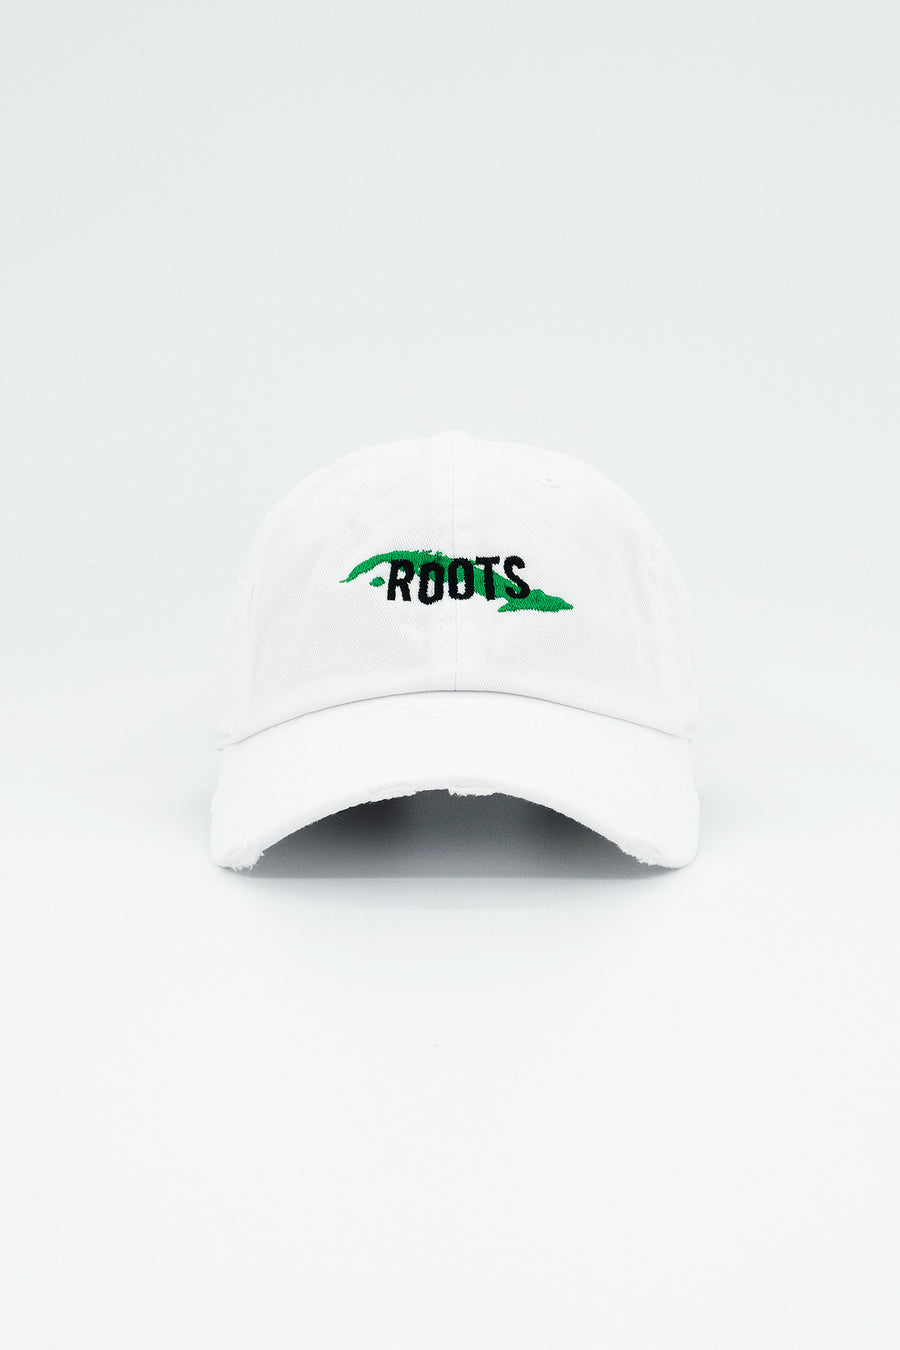 Cuban Roots Hat